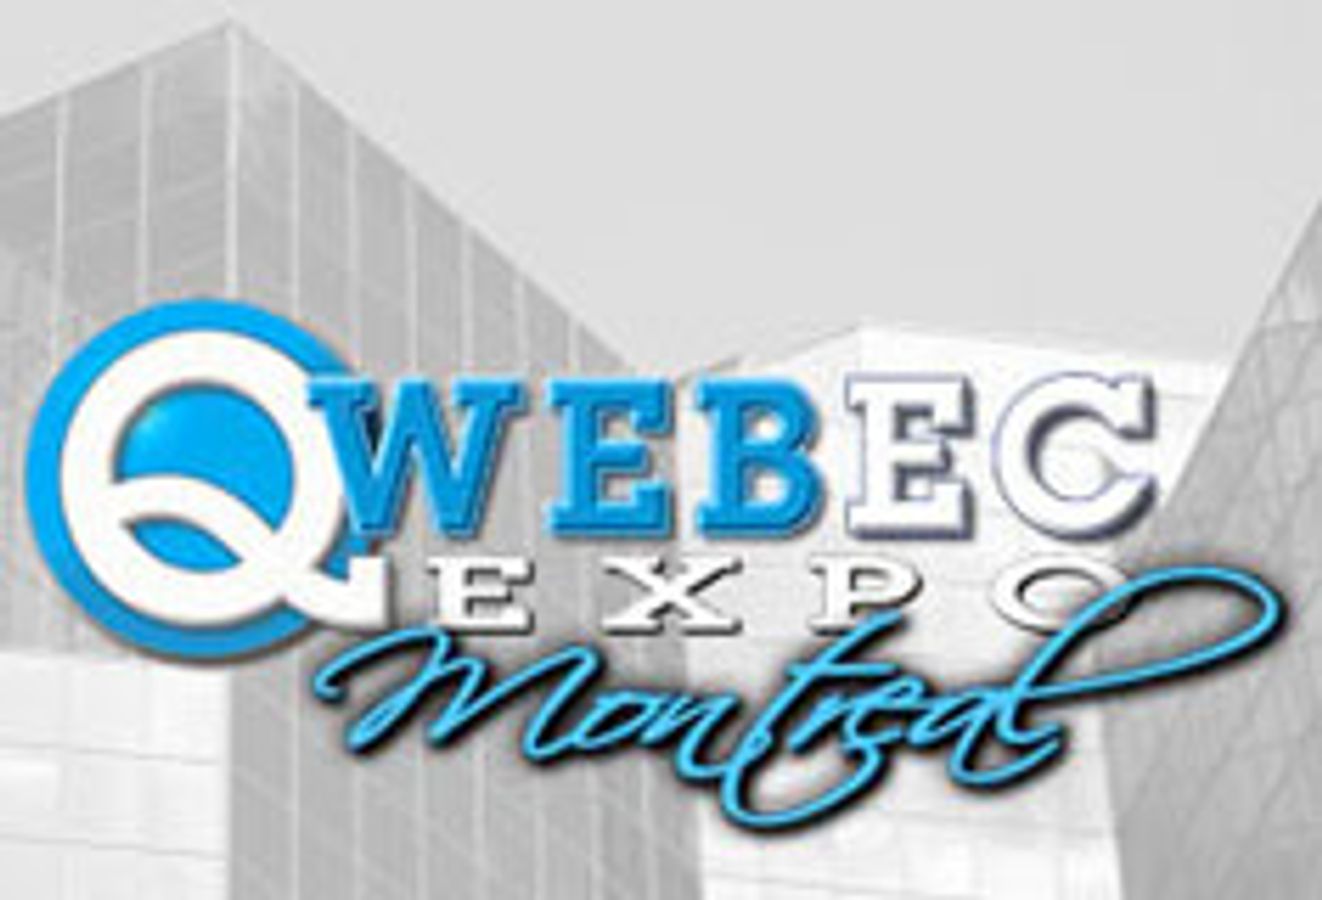 Qwebec Expo